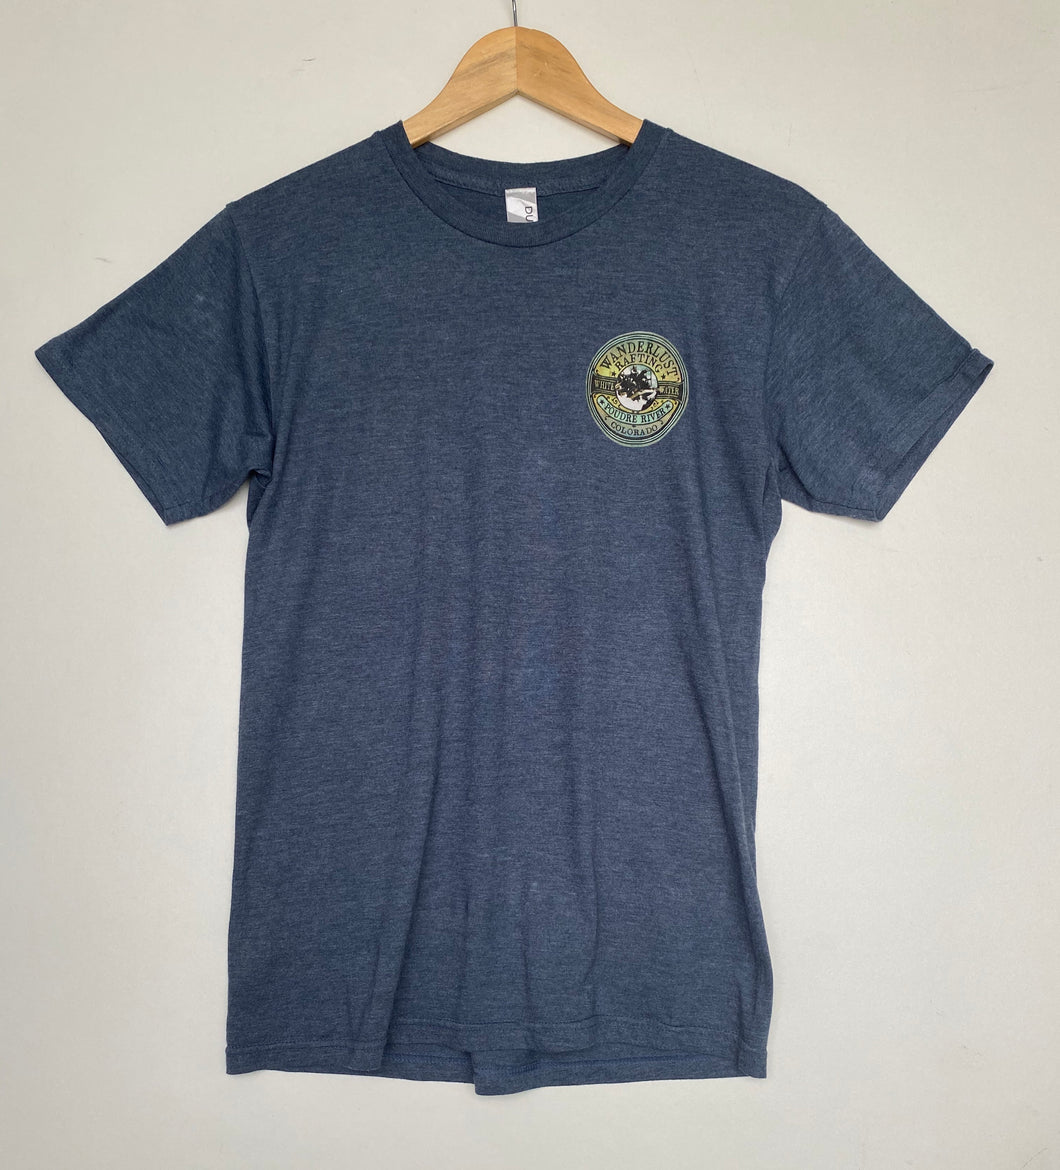 Printed ‘Rafting’ t-shirt (S)